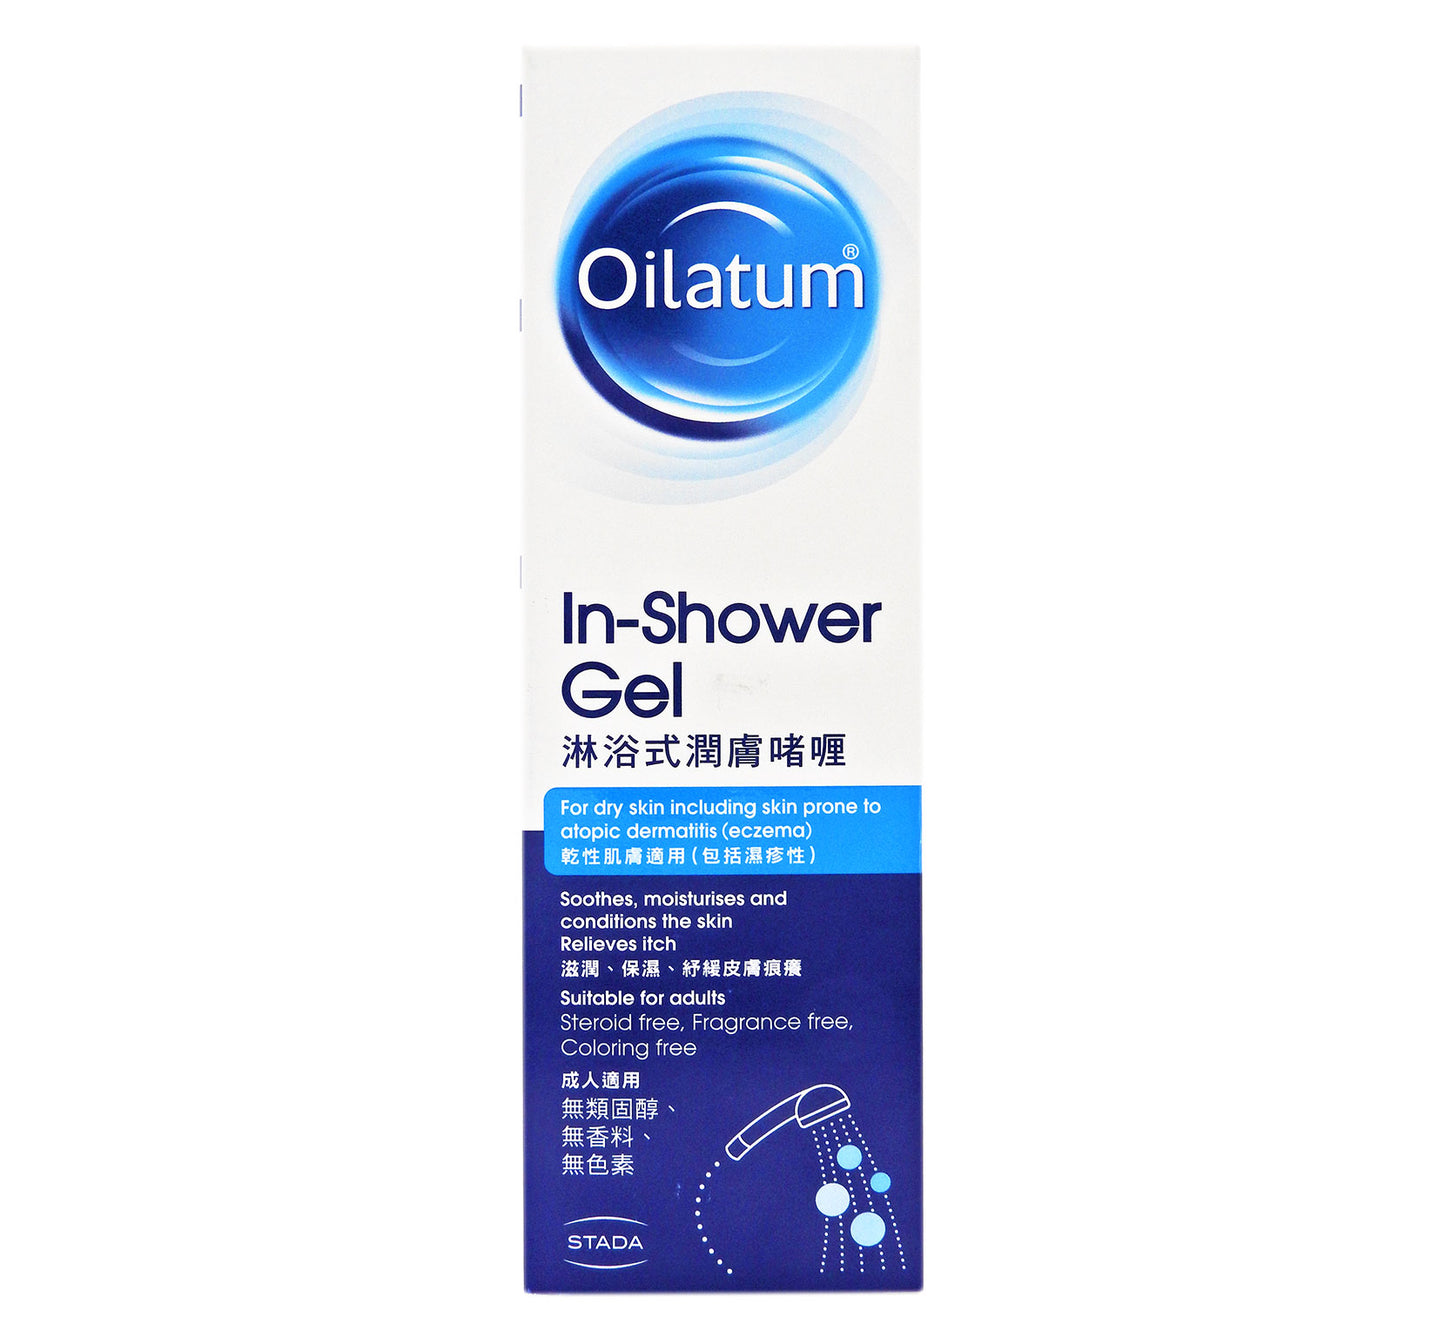 愛麗她 - Oilatum 淋浴式潤膚啫喱 In-Shower Gel 150g #48881